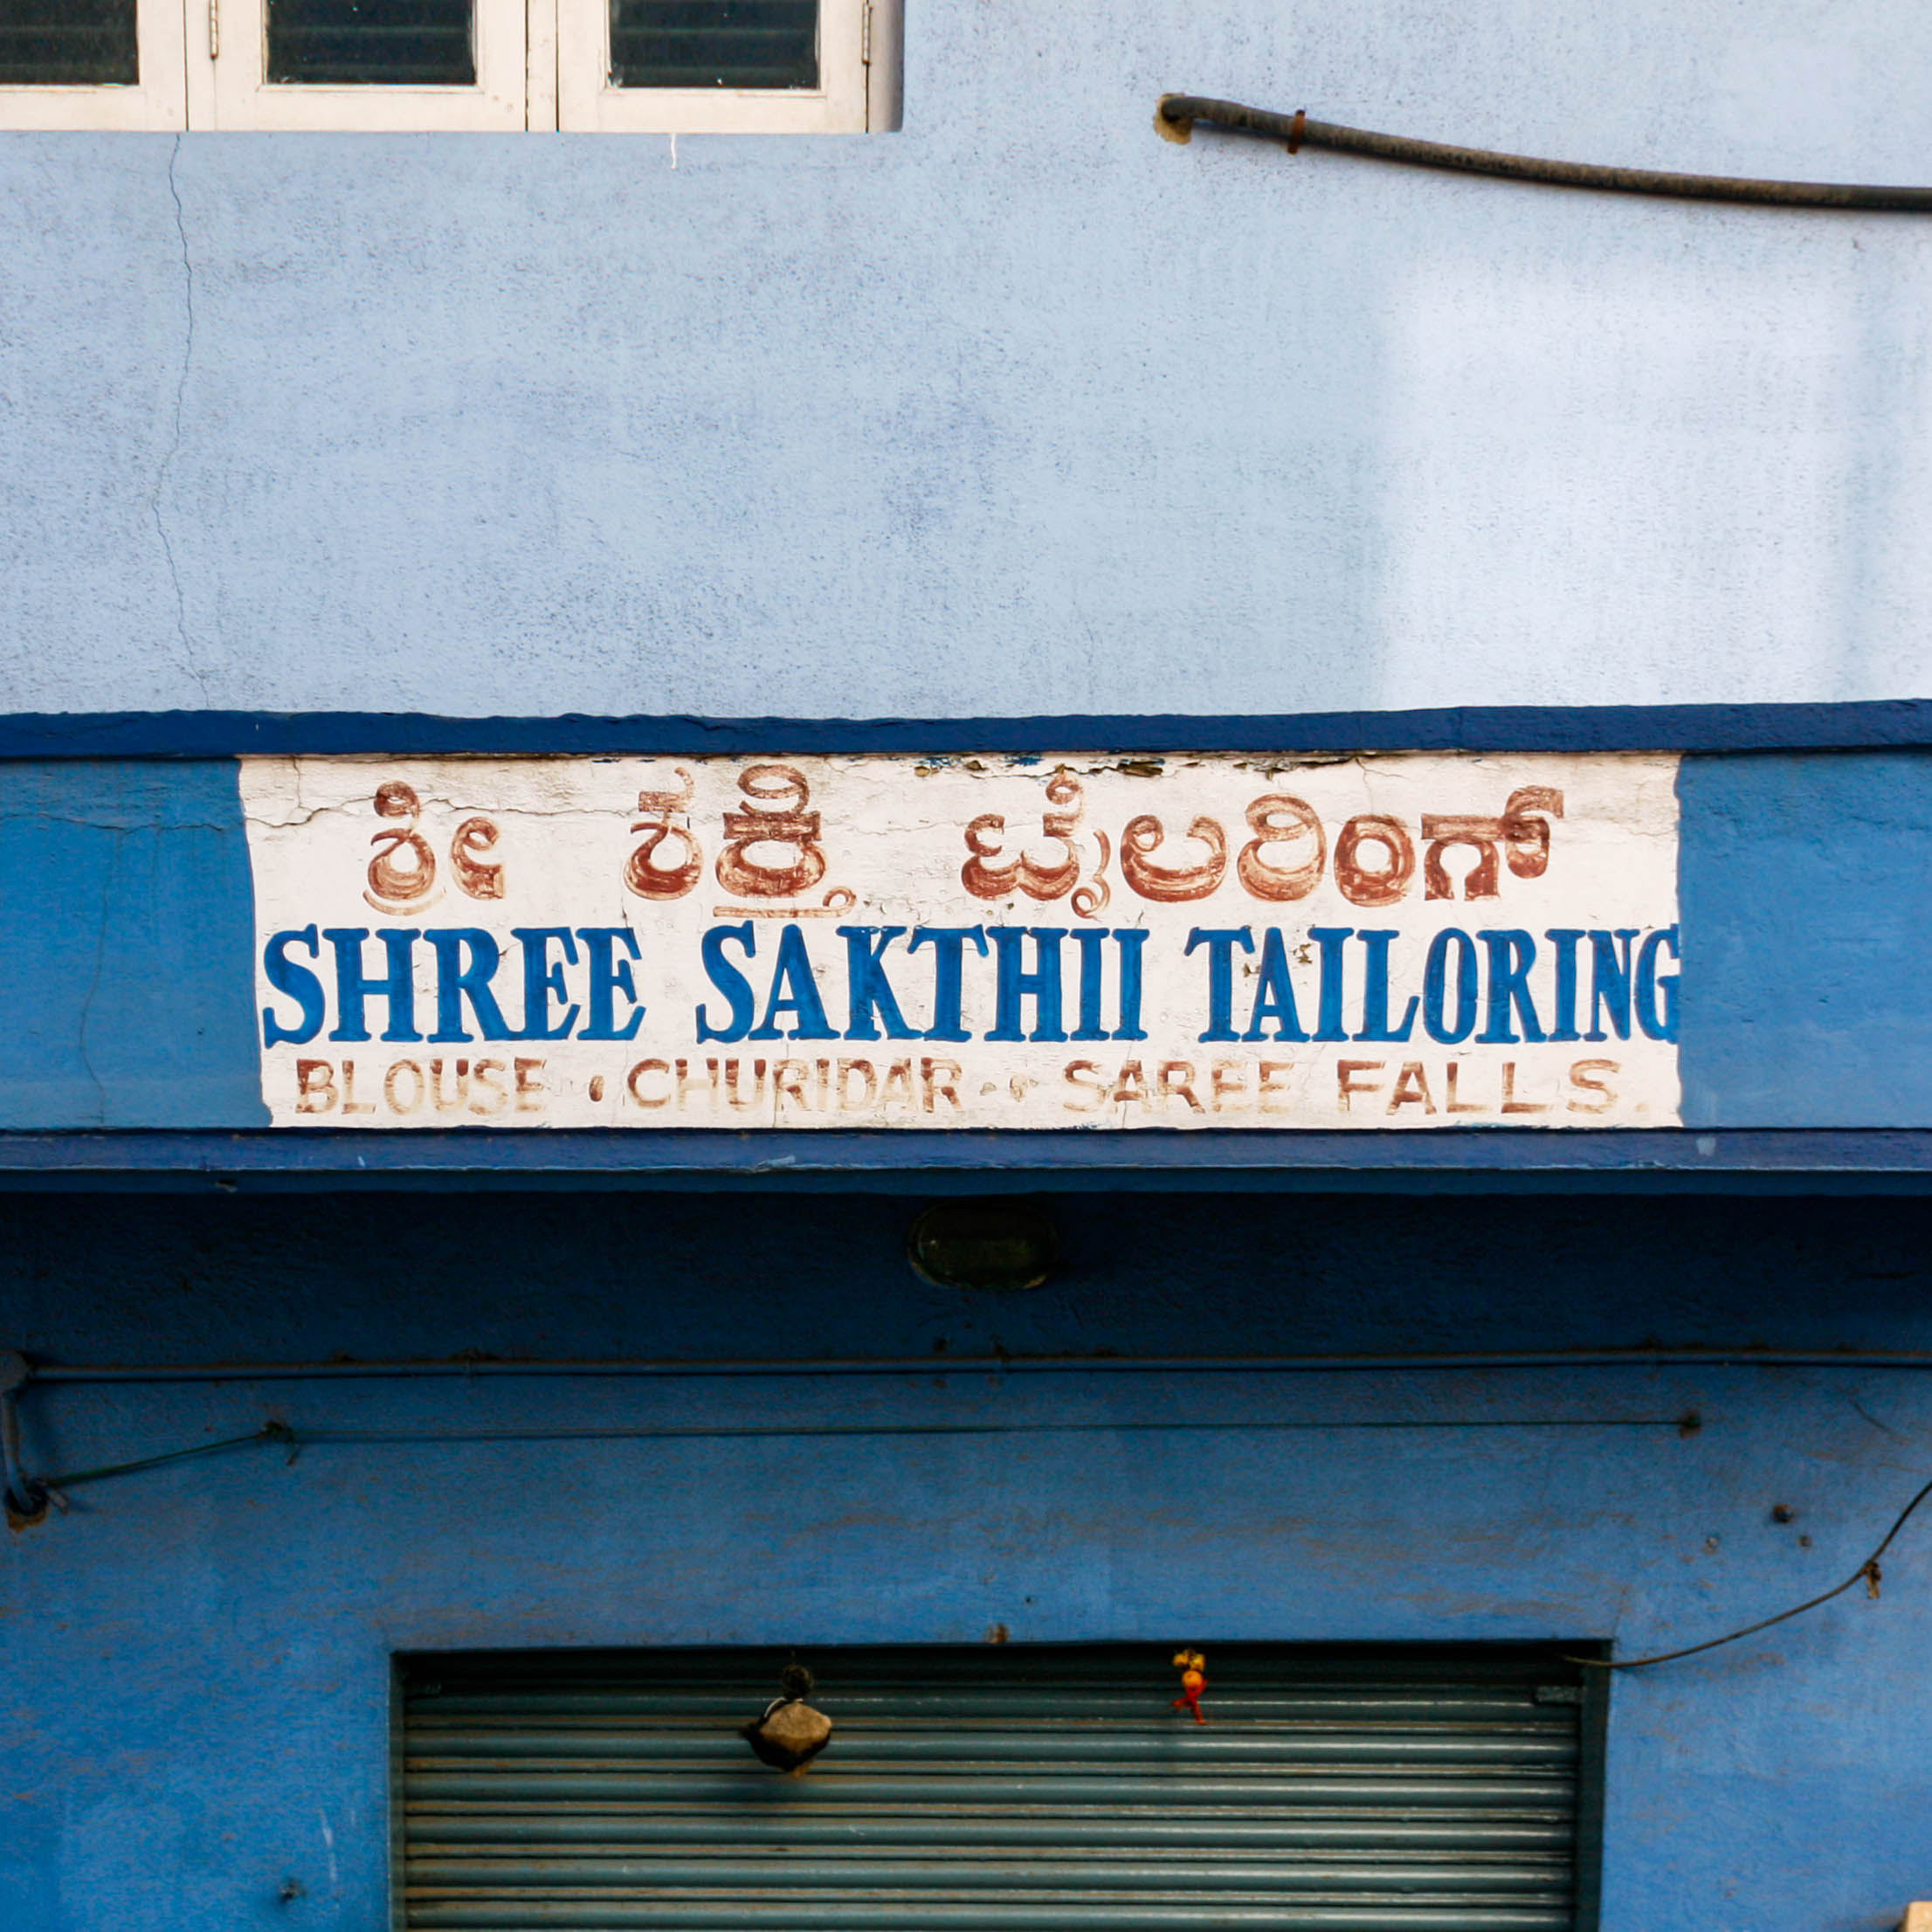 Shree Sakthii Tailoring